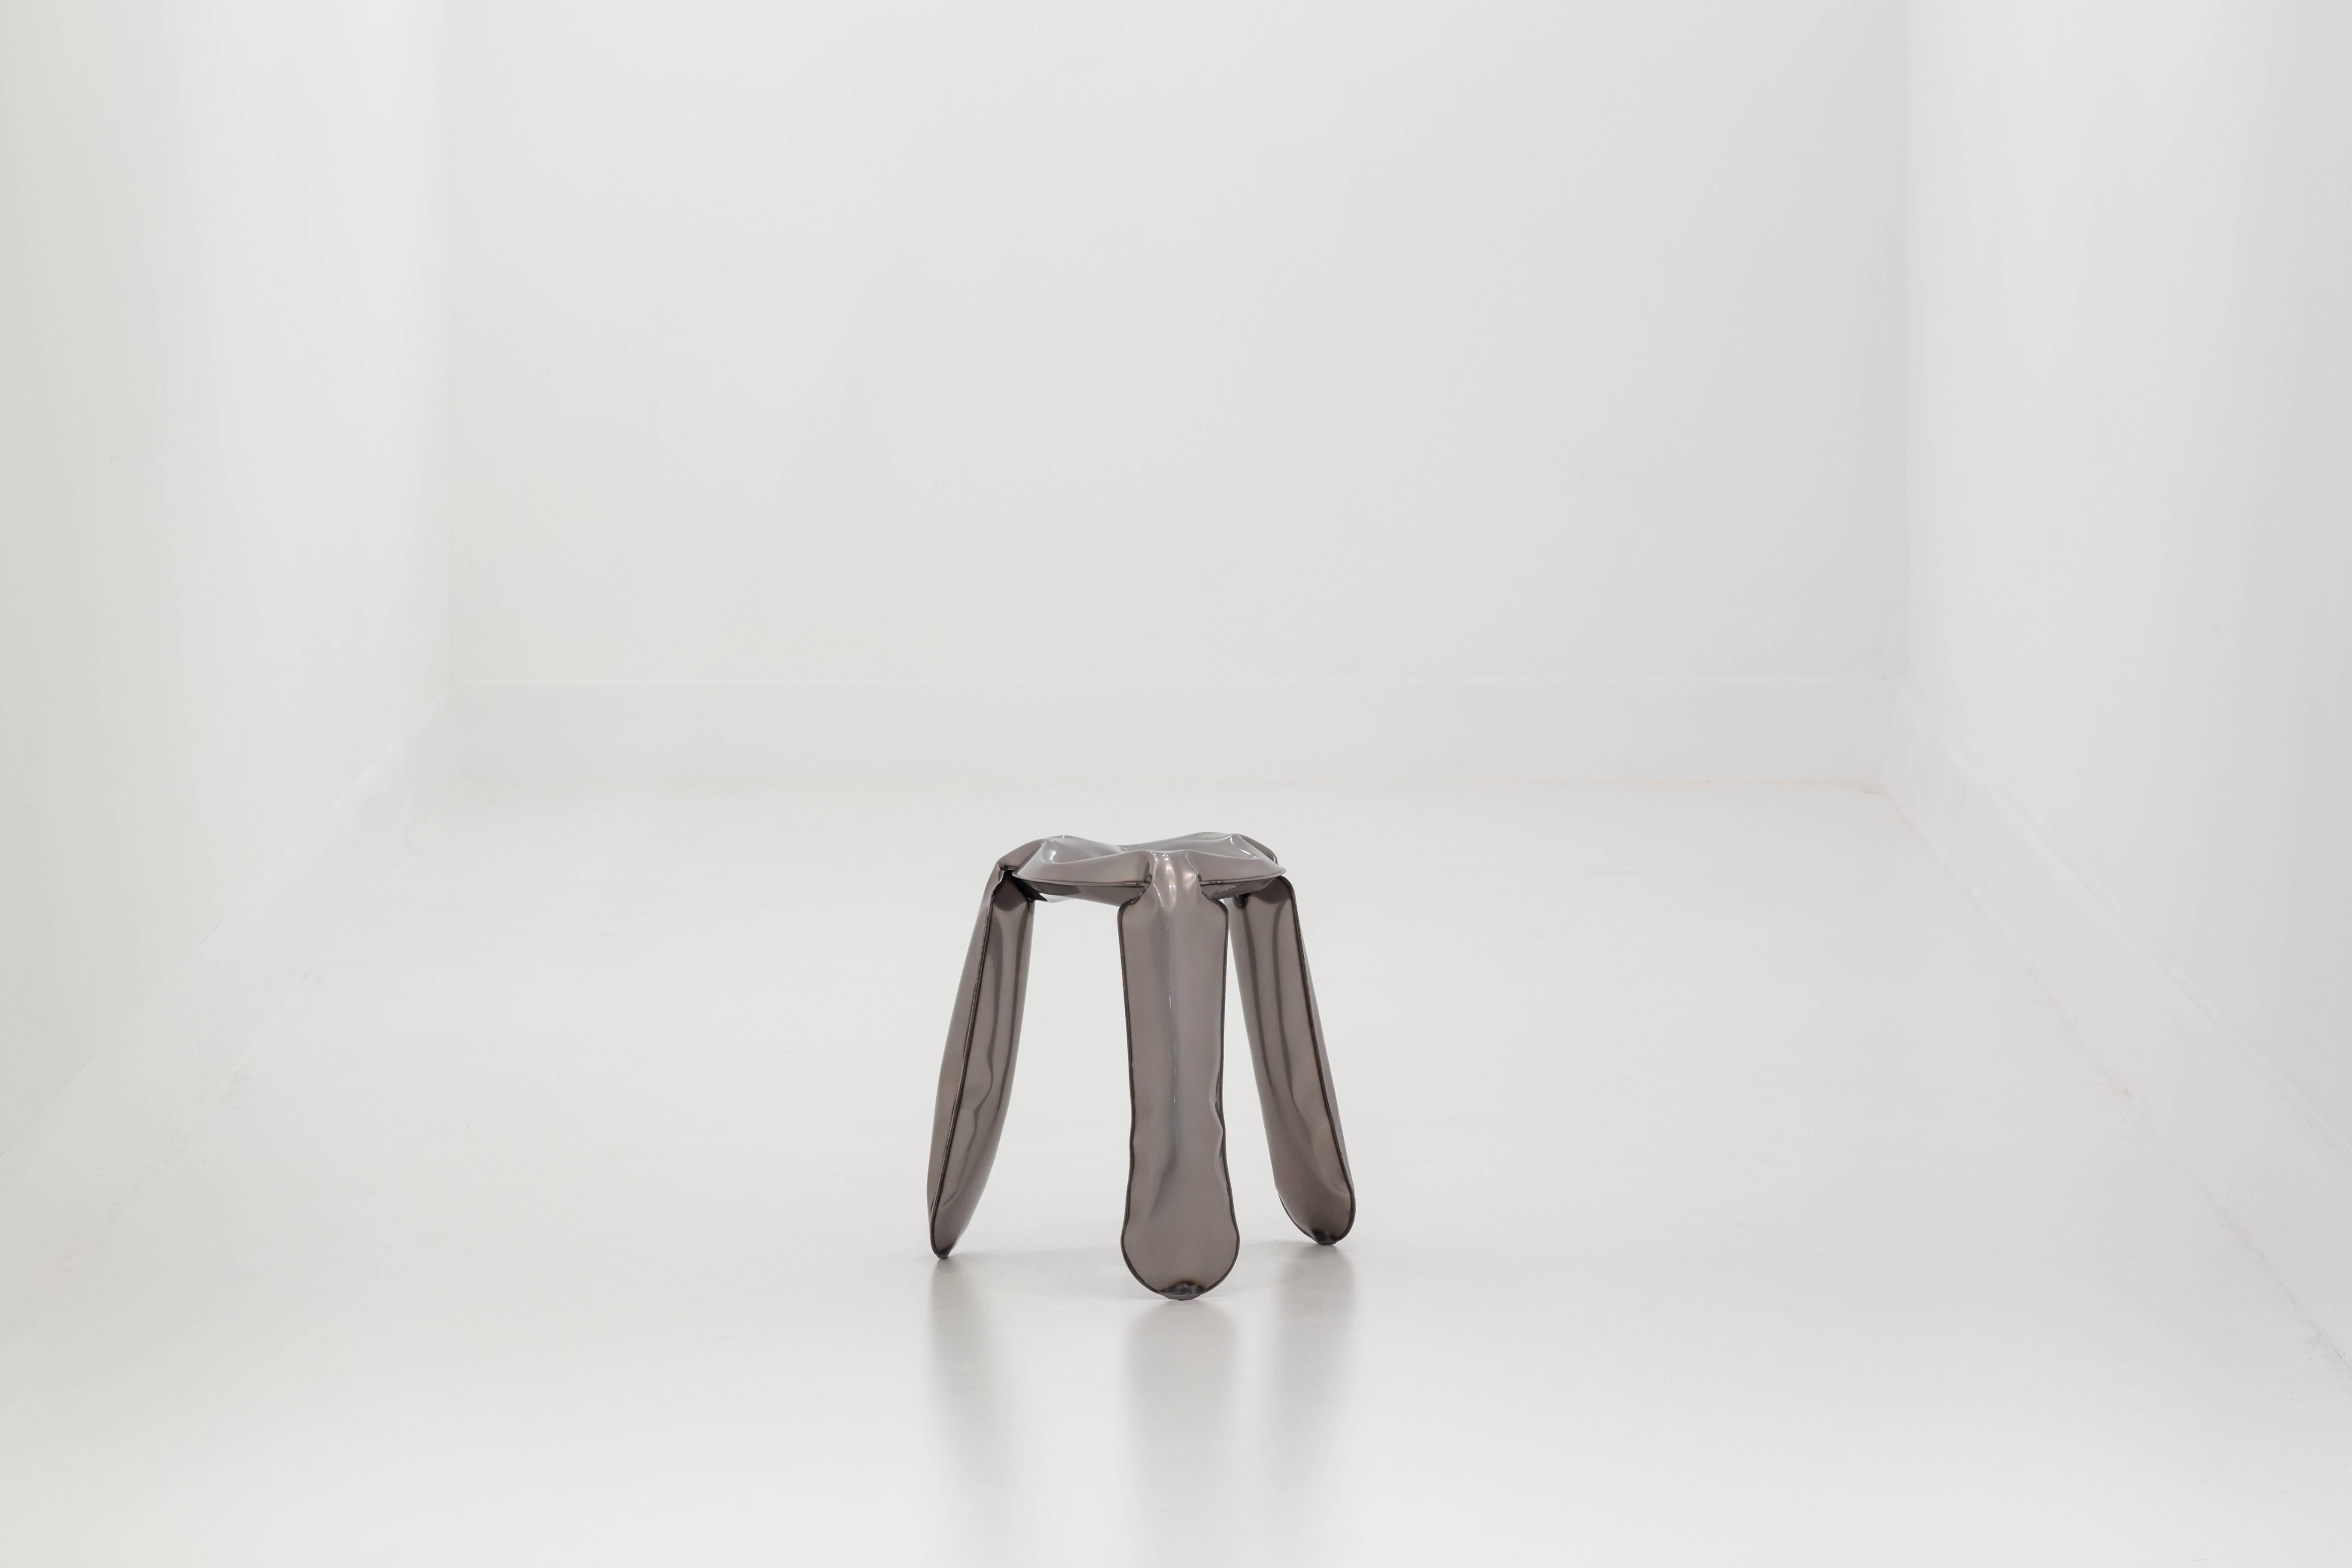 Plopp Stool 'Mini' by Zieta Prozessdesign, Stainless Steel ‘Inox’ Version For Sale 2